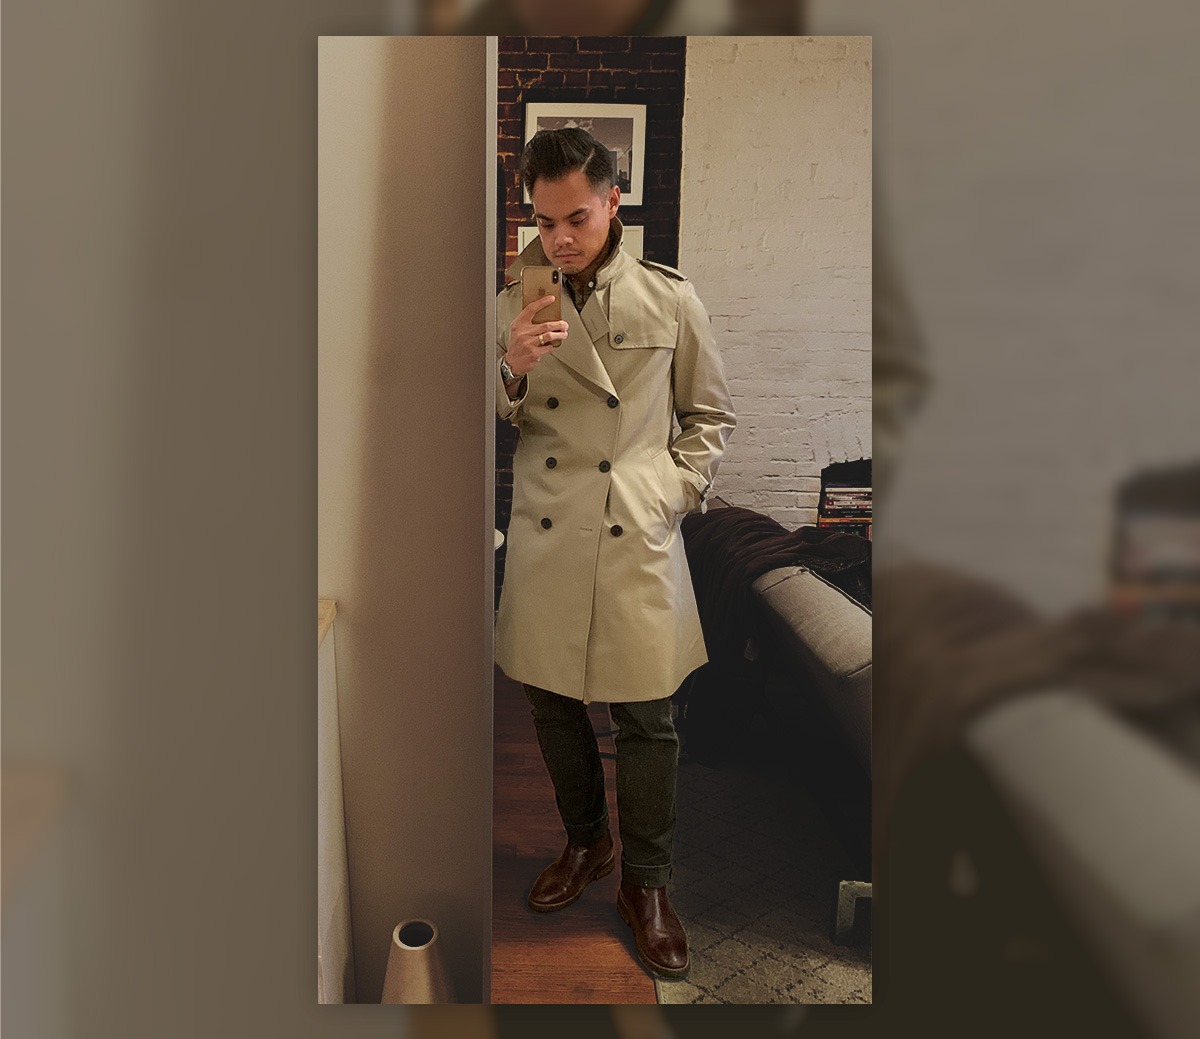 man taking photo in mirror wearing a tan trench coat